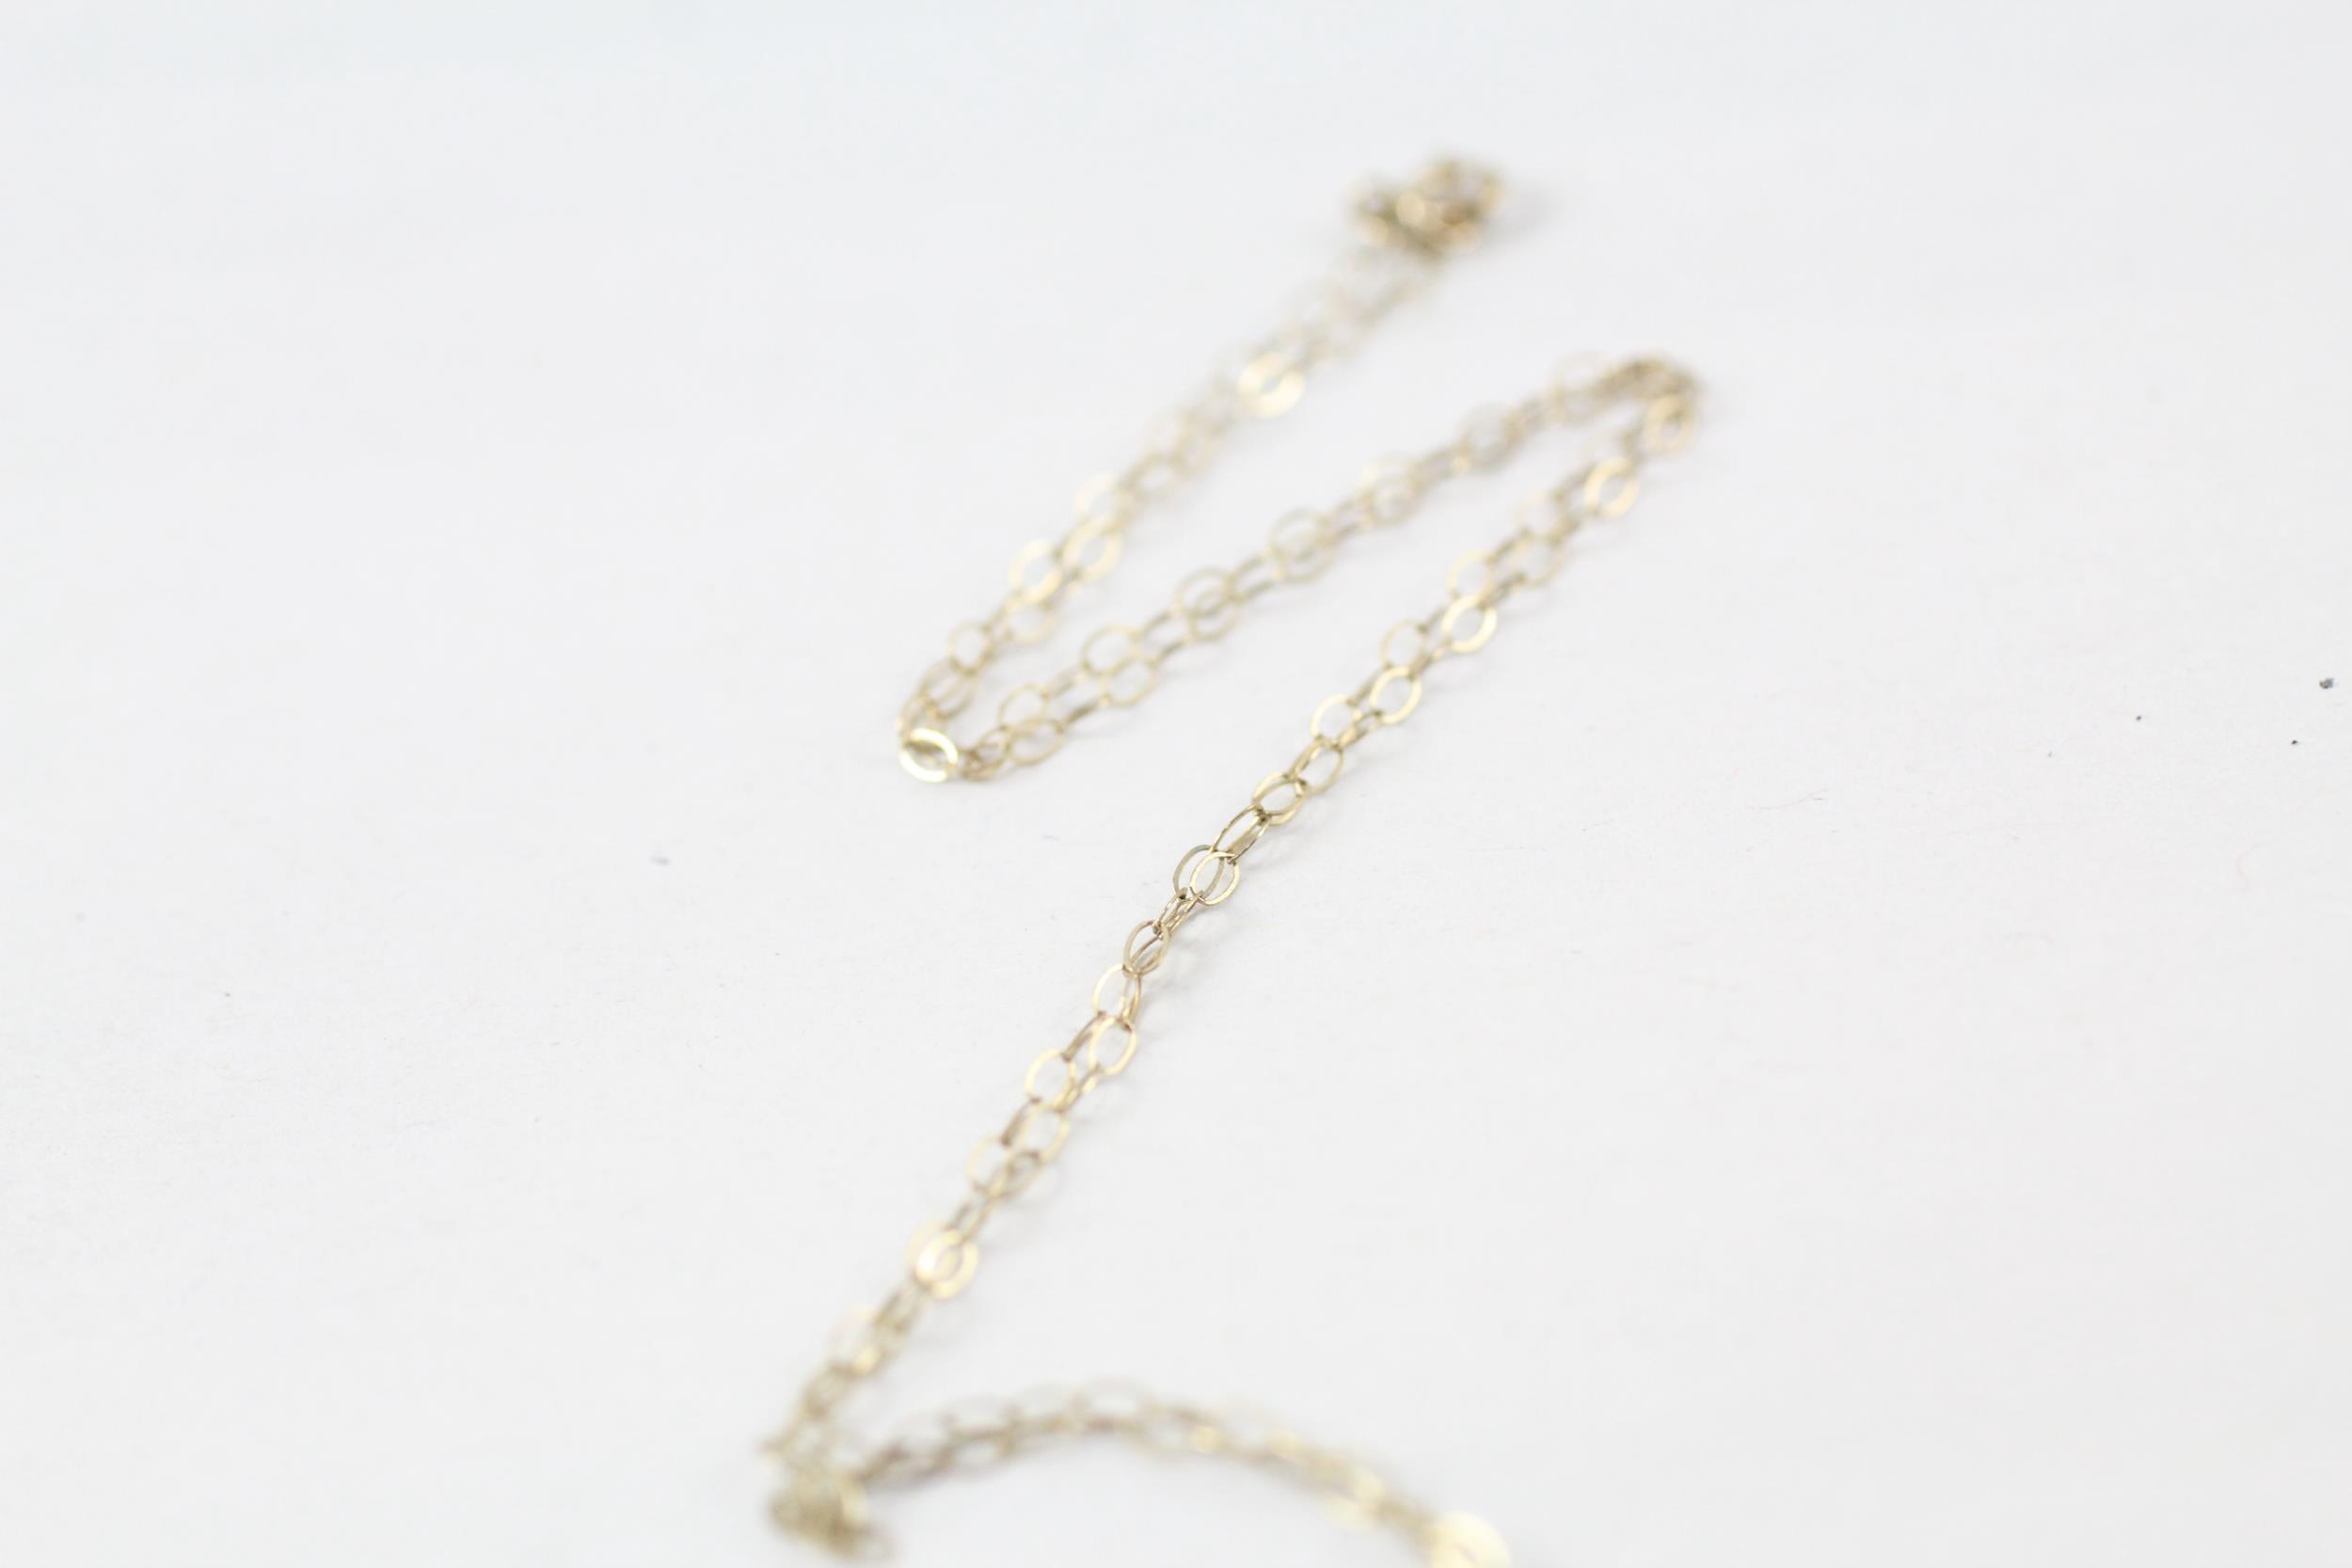 9ct gold ruby & diamond cross pendant & chain (1.8g) - Image 4 of 4